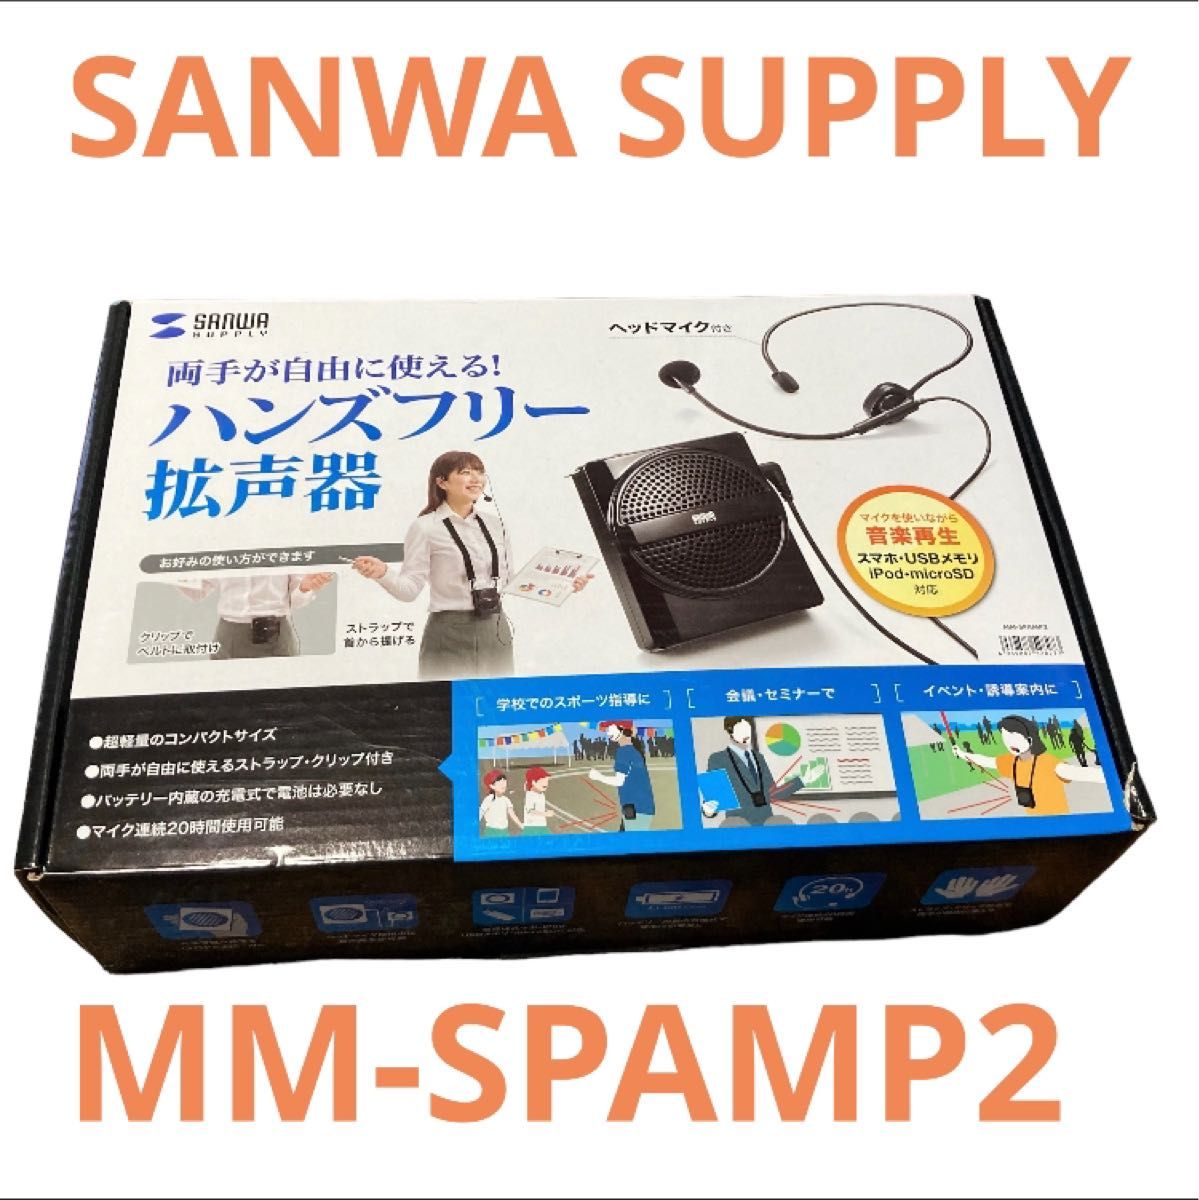 SANWA SUPPLY Model: MM-SPAMP2